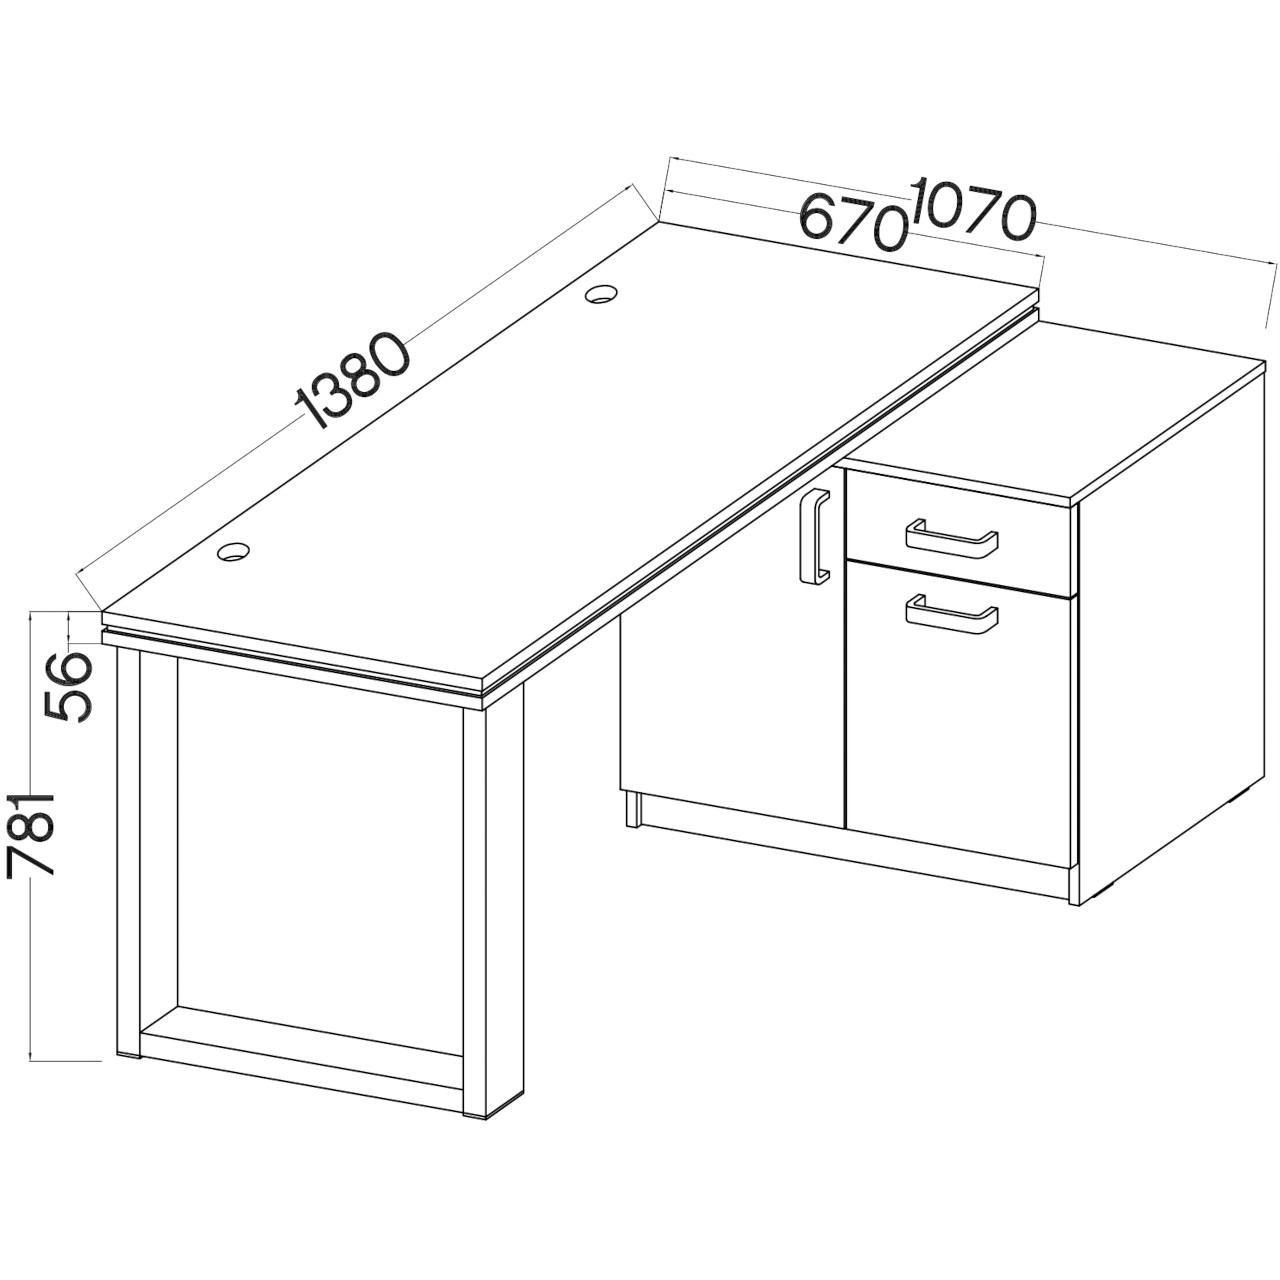 Storage Cabinet with desk MALTA MT16 light grey / artisan oak